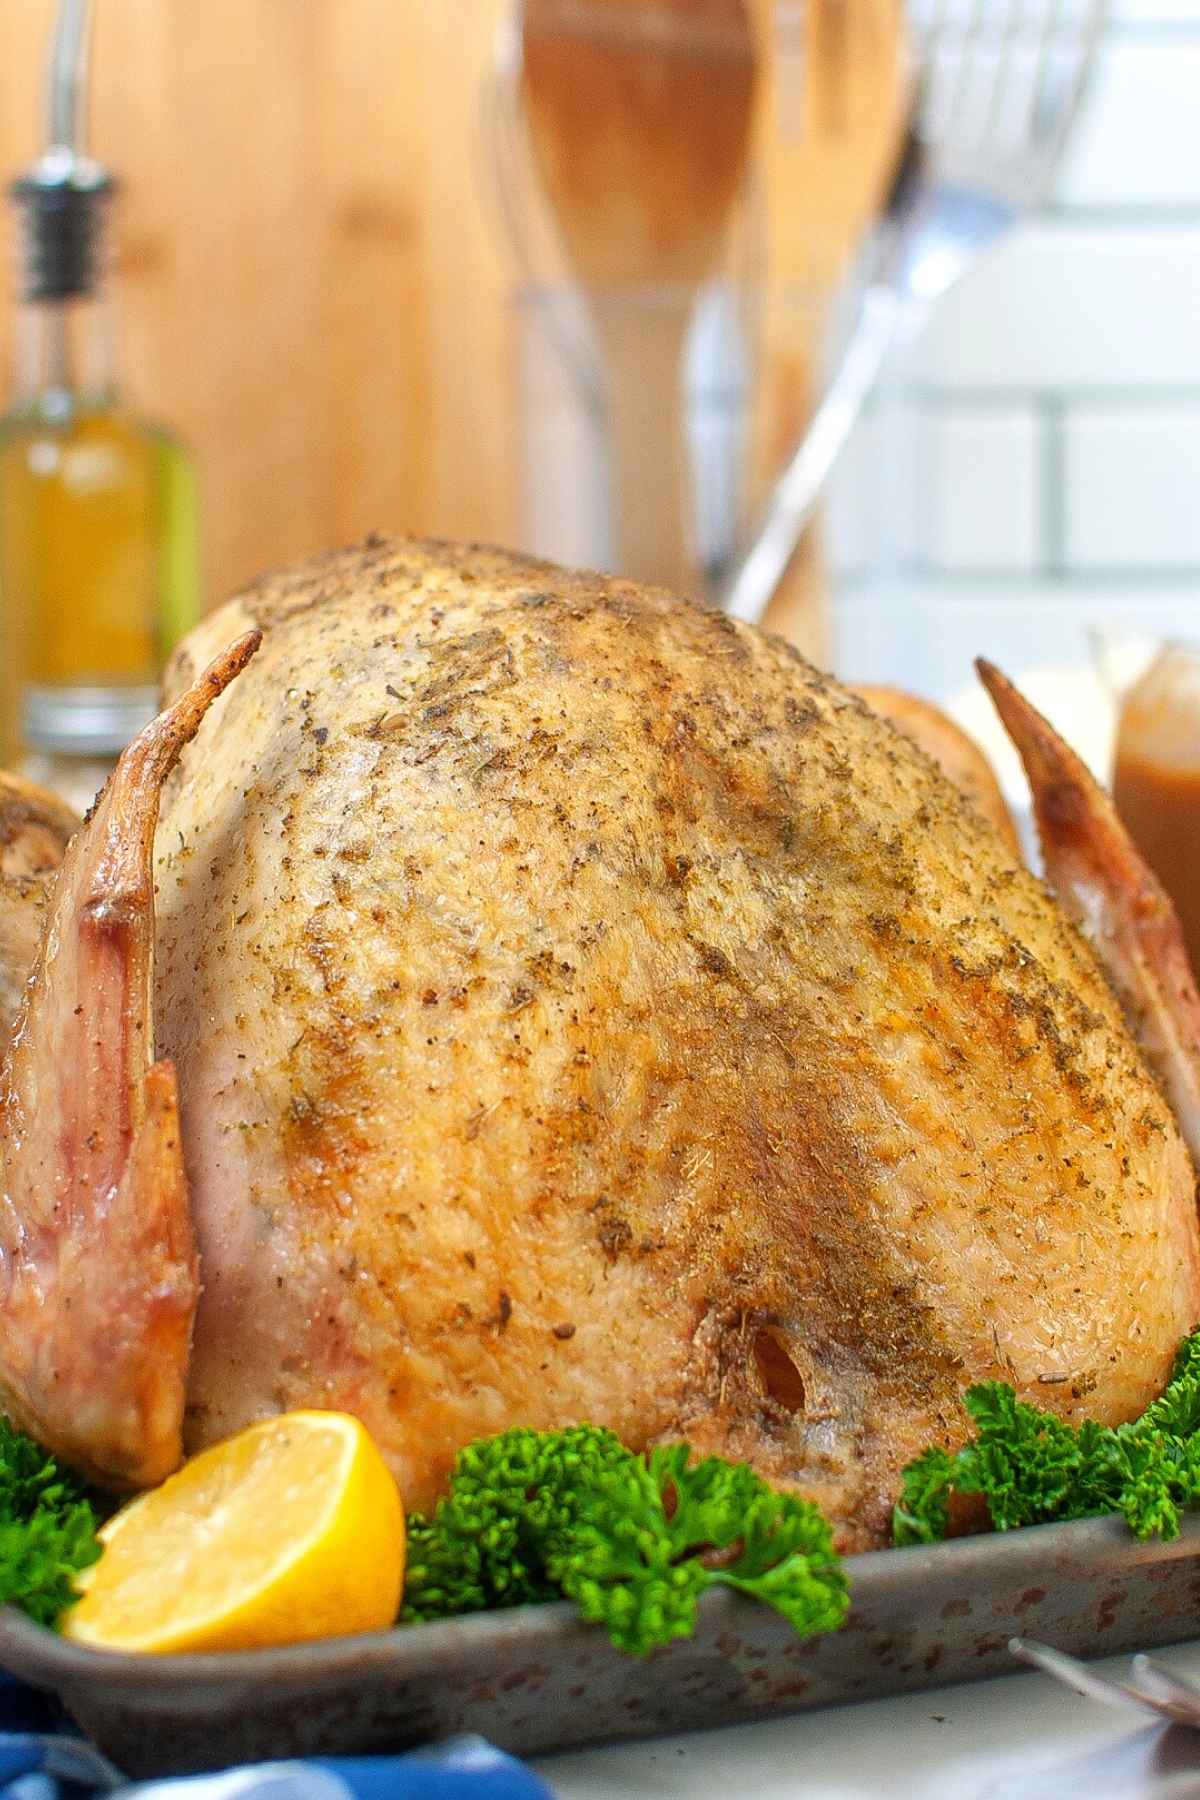 A golden brown pan roasted turkey on a platter.